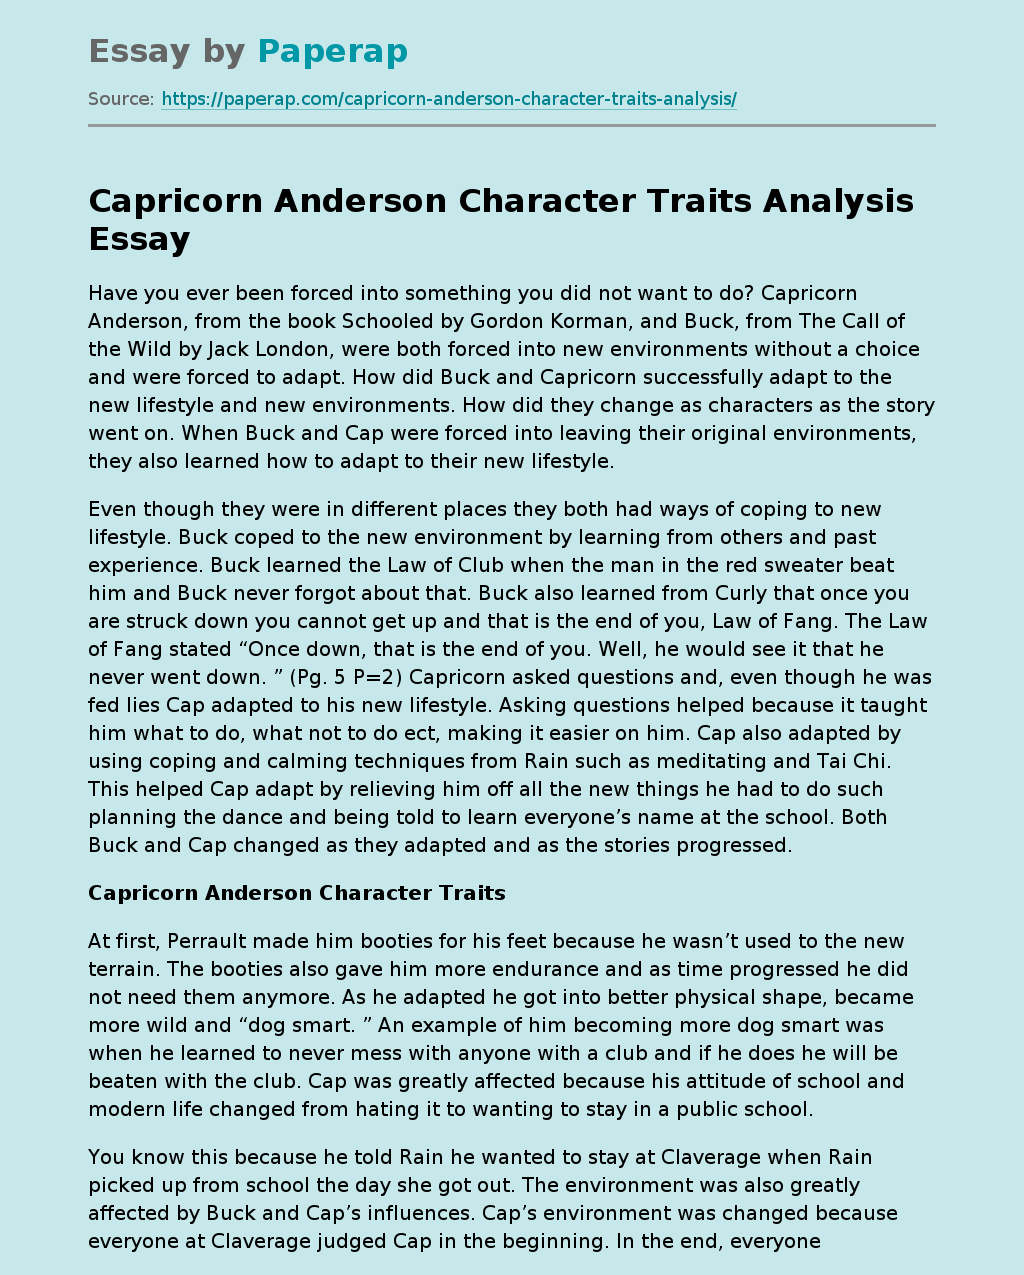 Capricorn Anderson Character Traits Analysis